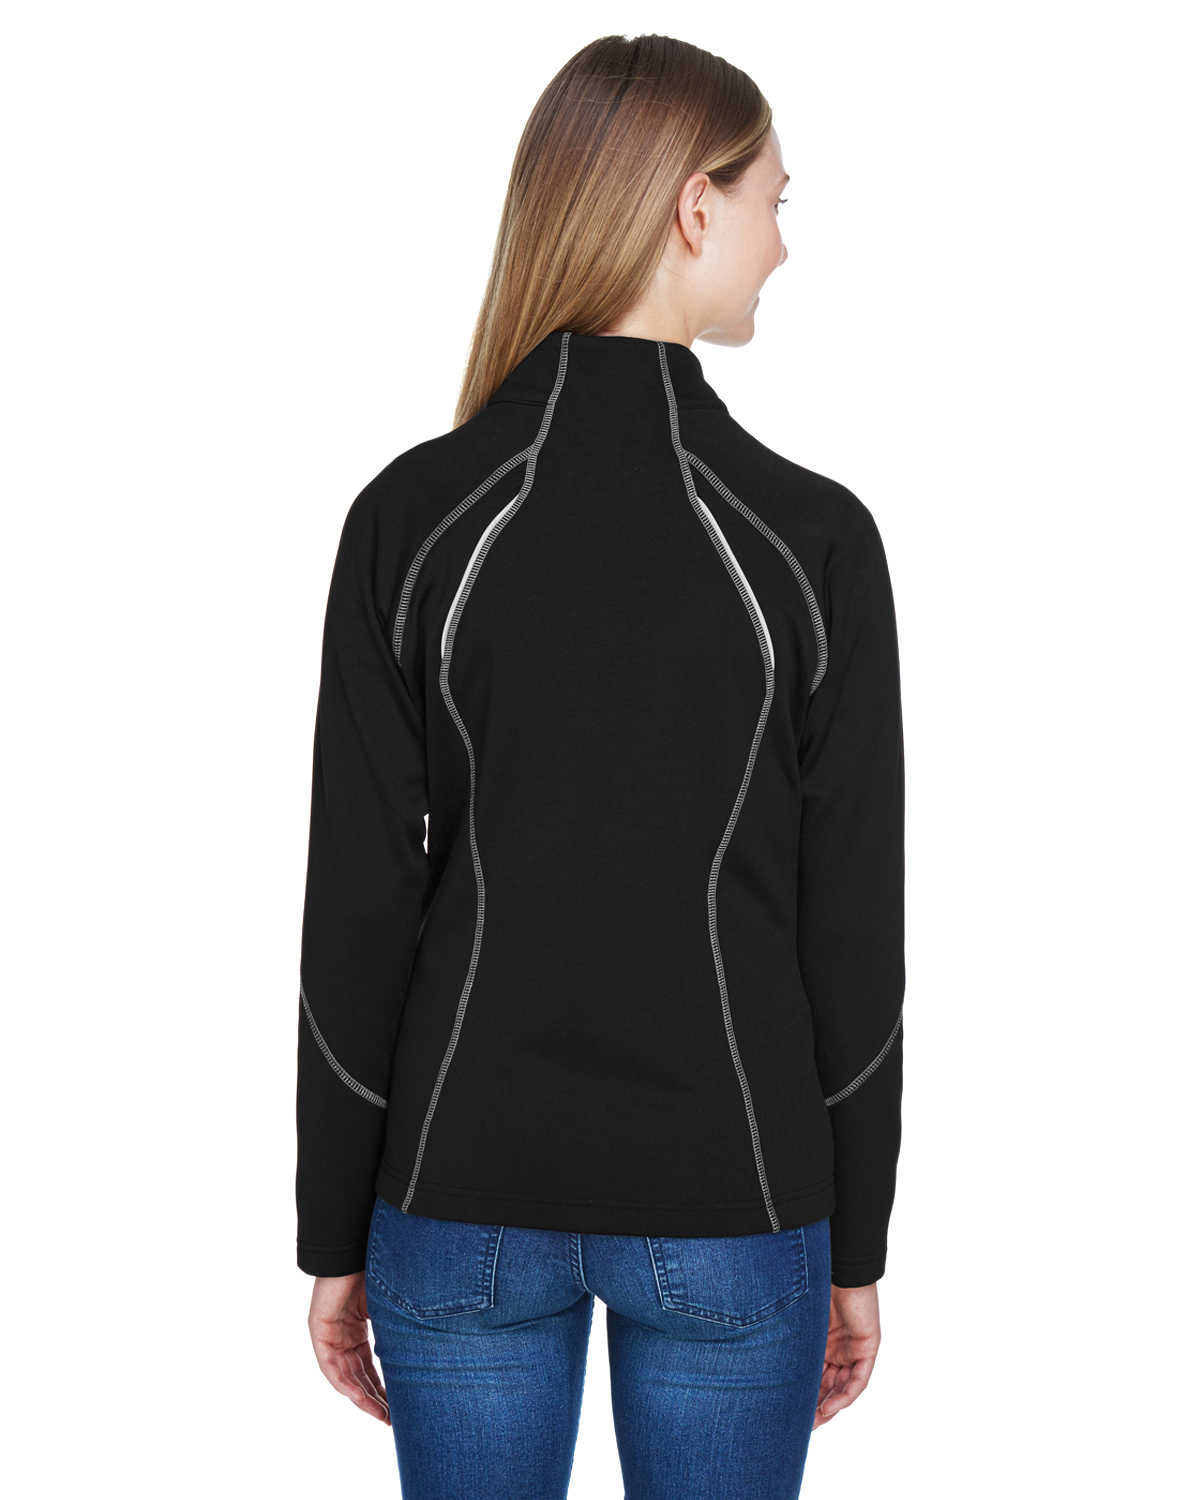 The Ash City - North End Ladies' Gravity Performance Fleece Jacket - BLACK 703 - XL - image 2 of 2